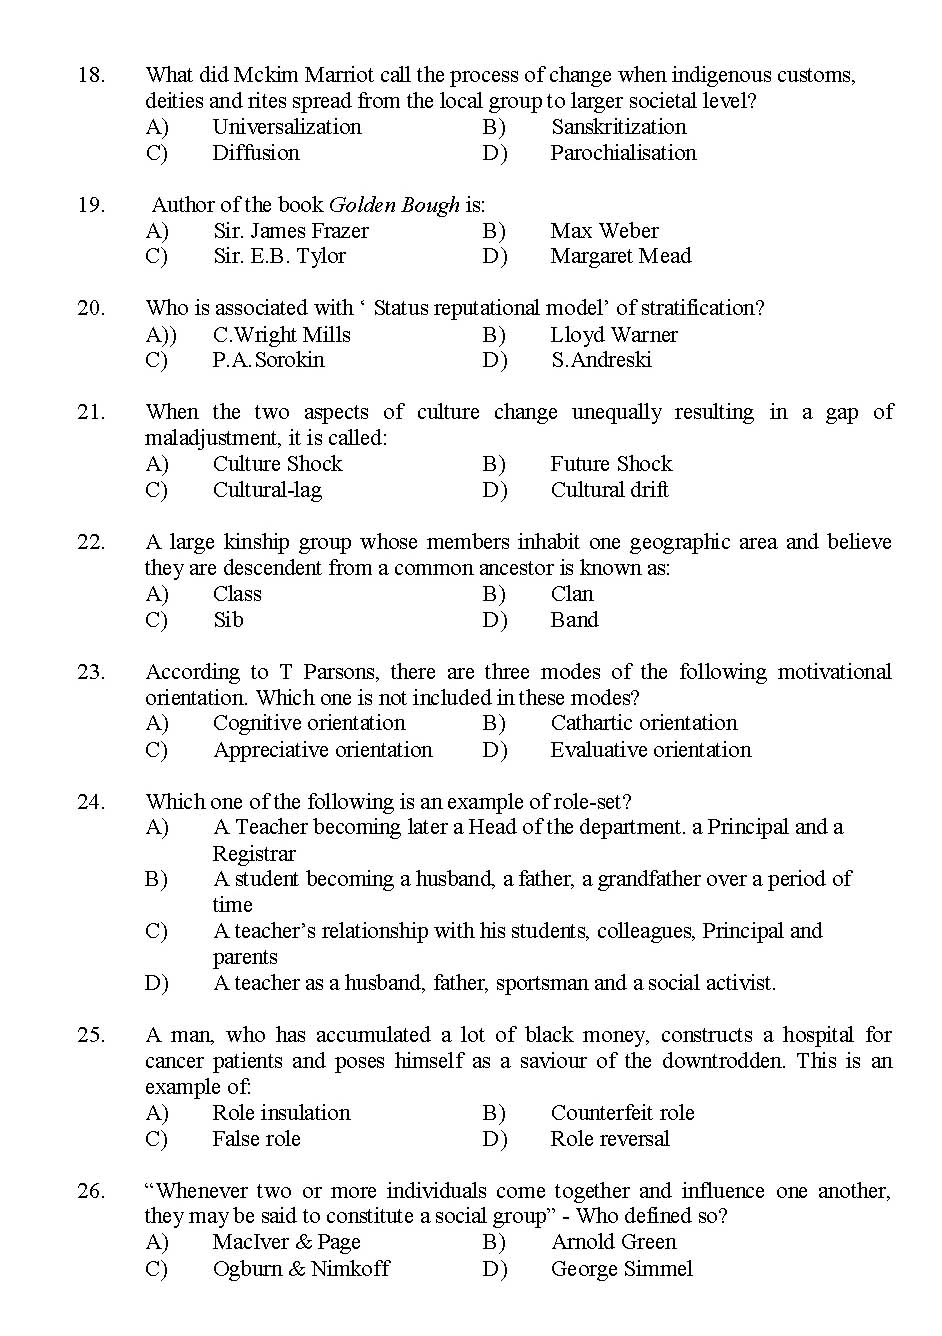 Kerala SET Sociology Exam 2015 Question Code 15630 3